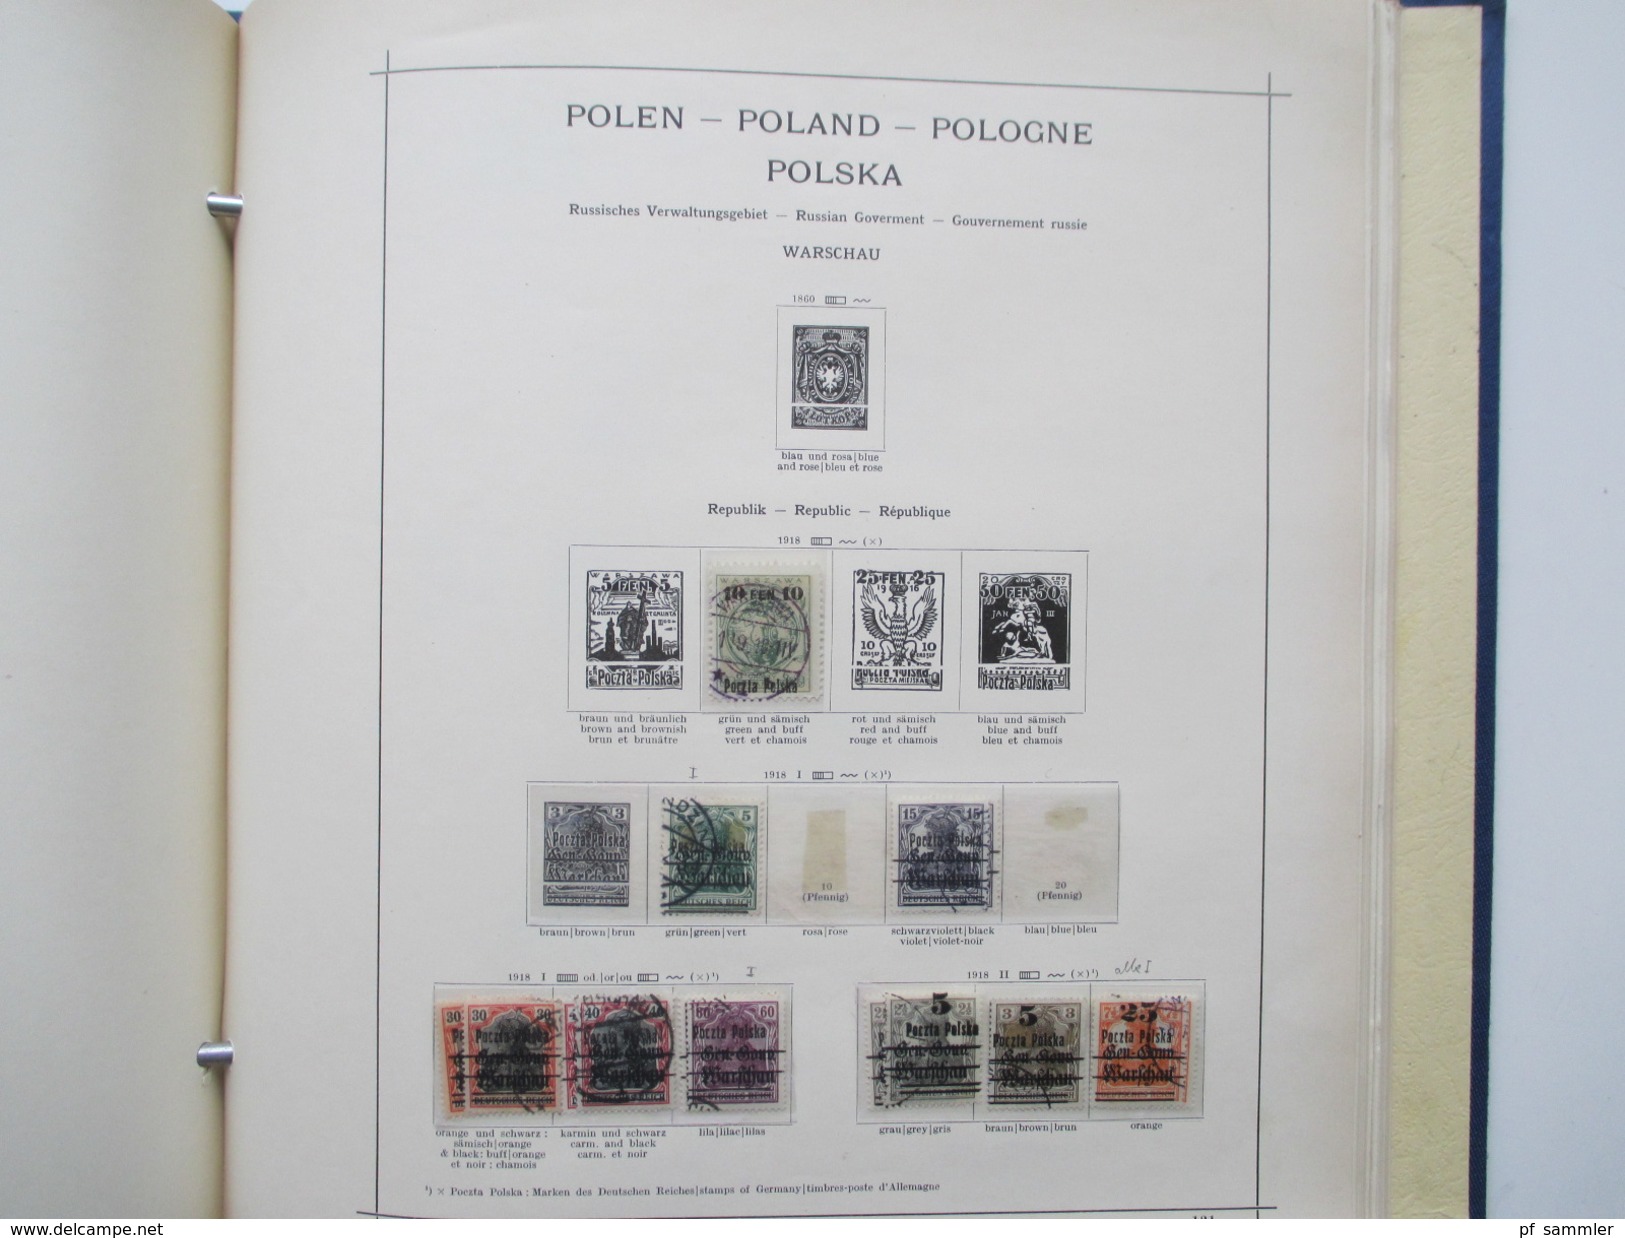 Sammlung Bulgarien / Polen */o interessantes VD Album mit viel Material! Fundgrube!? ab ca. 1881 - 1943